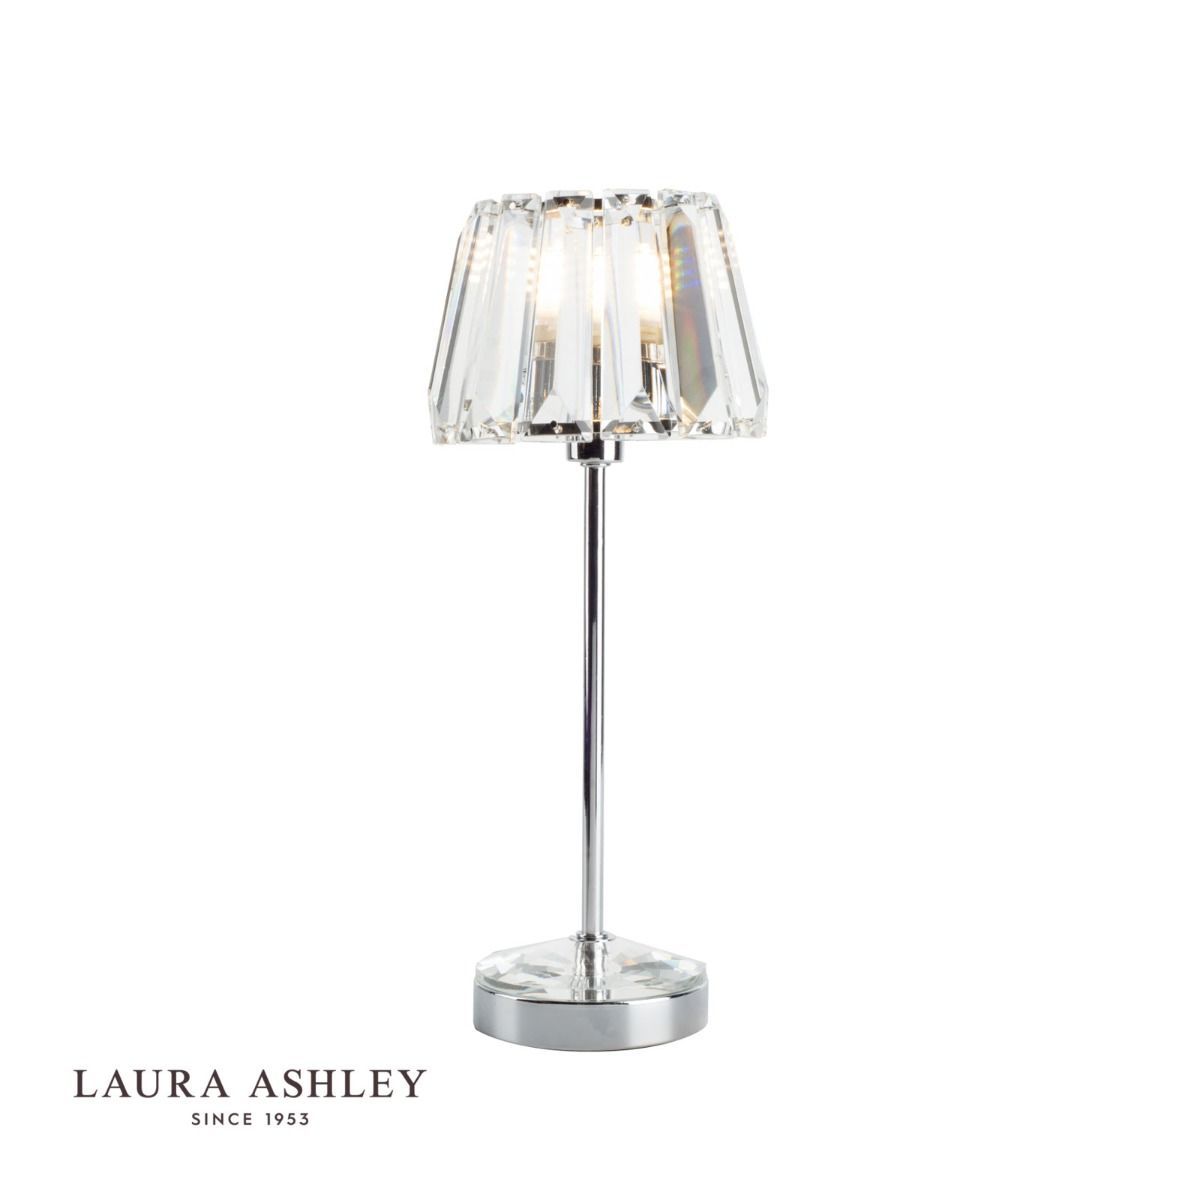 Laura Ashley Capri Small Table Lamp, Small Silver Table Lamps